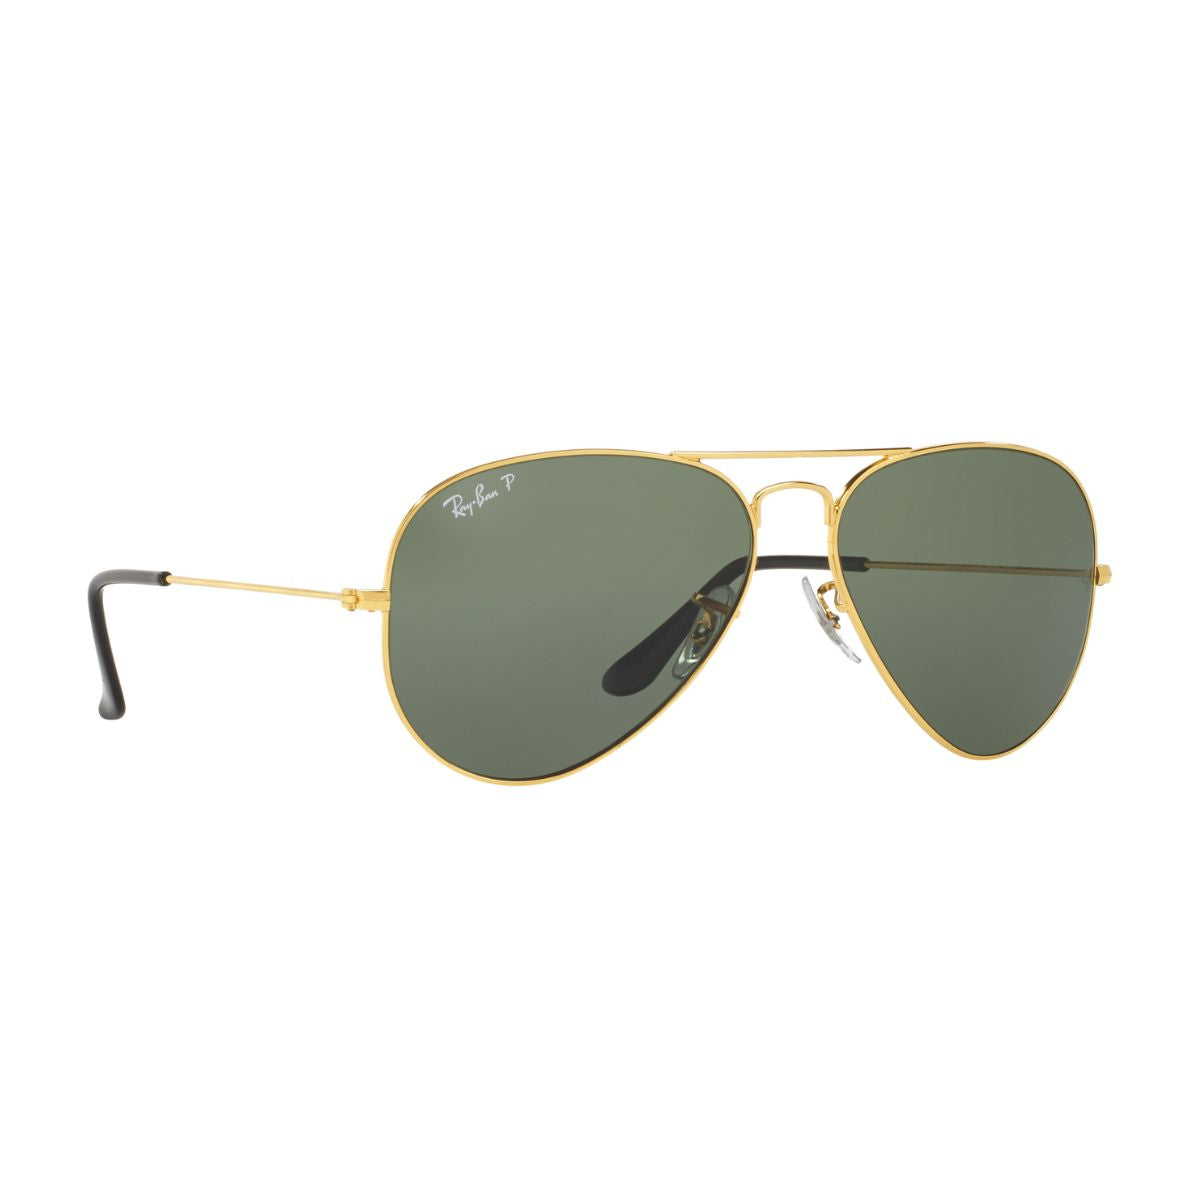 "Rayban 3025 001/58 Polarized Aviator Sunglasses For Men's At Optorium"